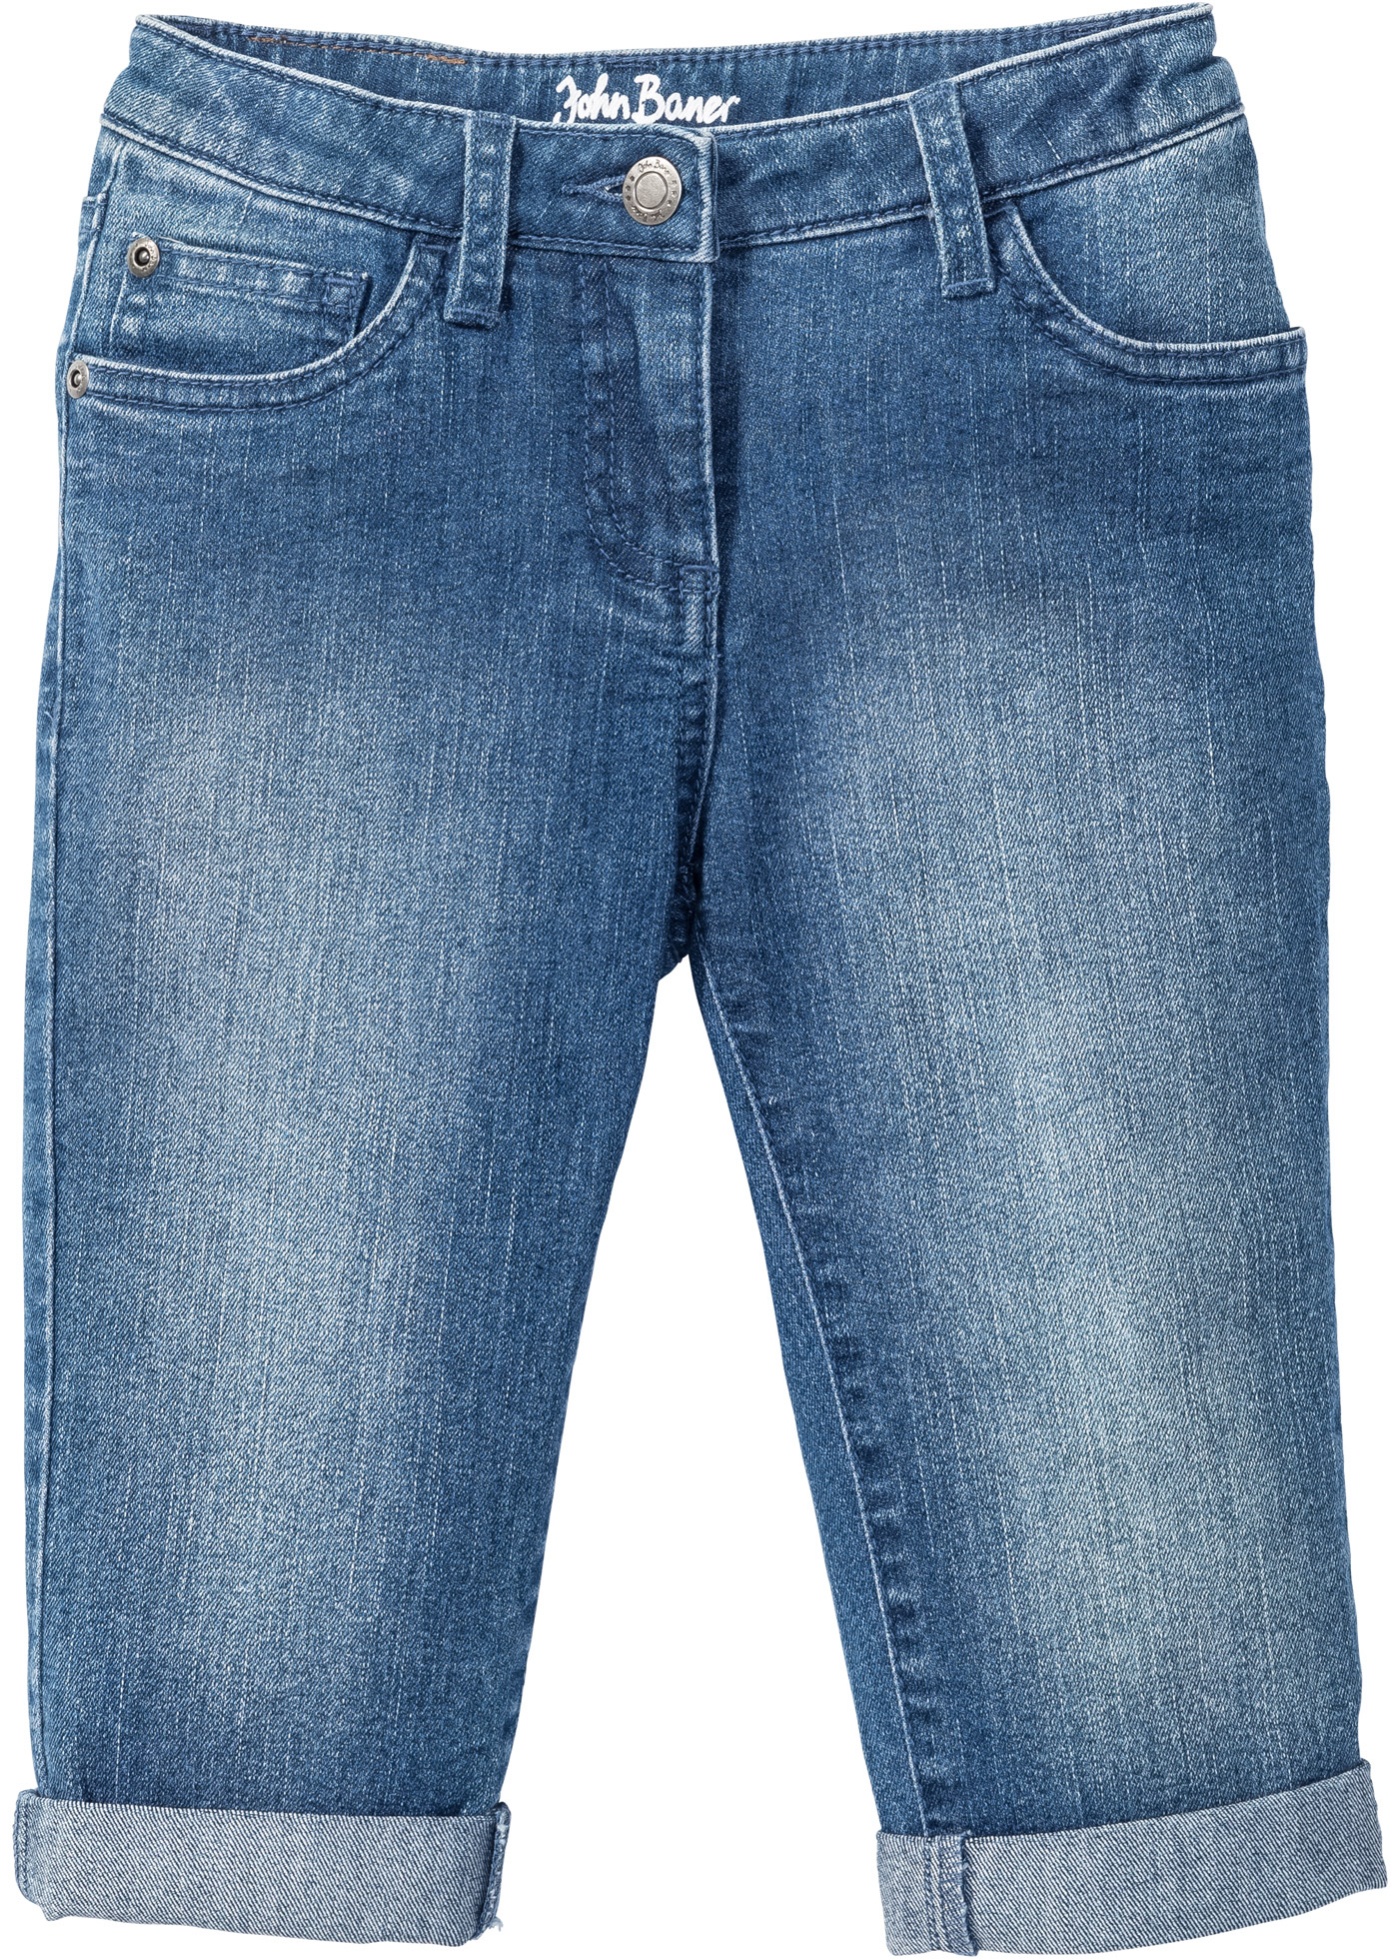 Meisjes capri jeans met omslag